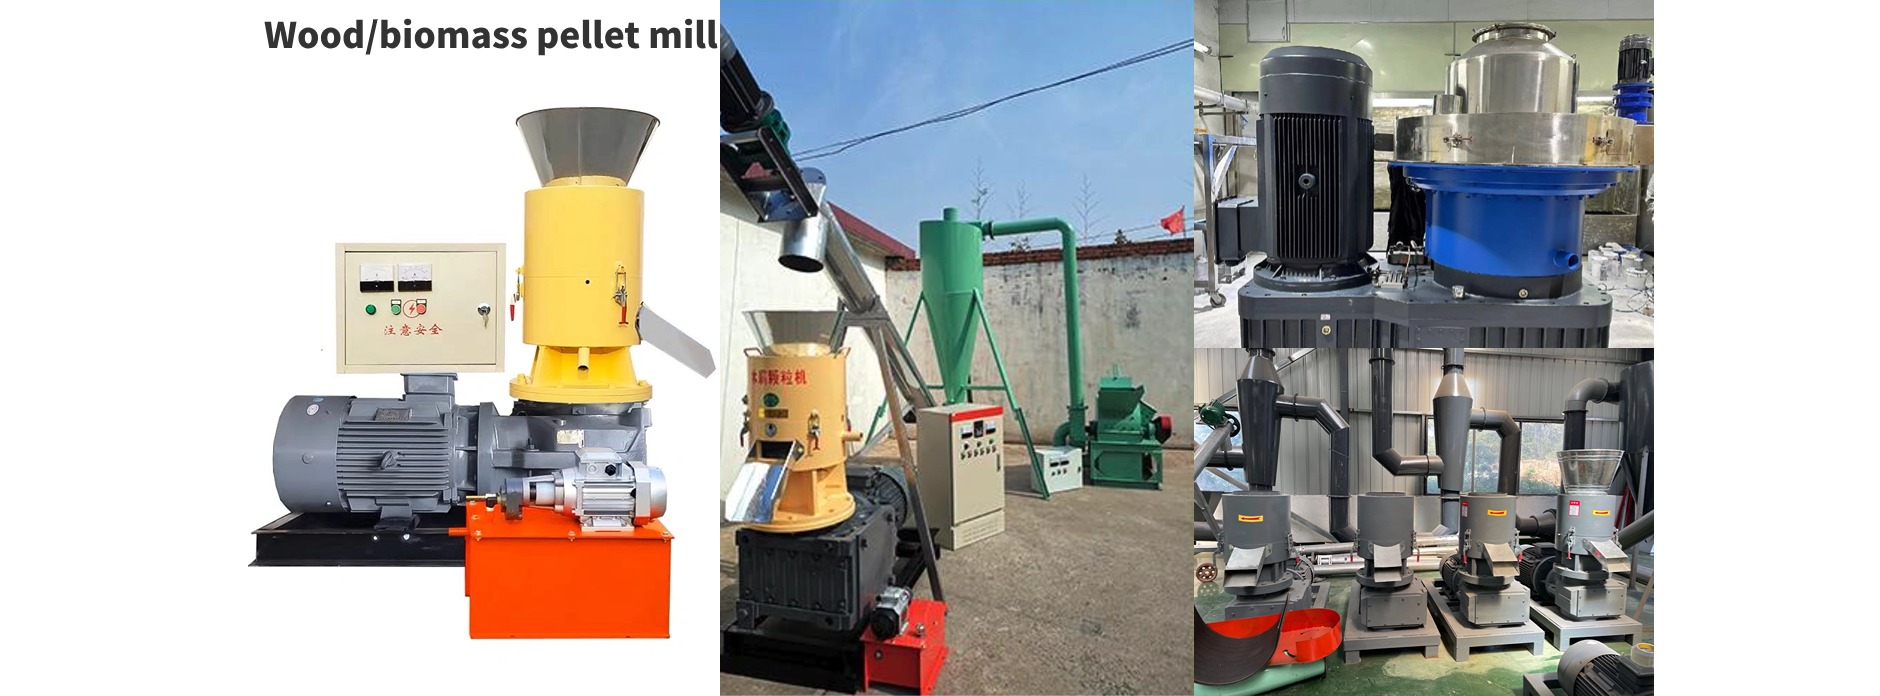 Wood biomass pellet mill machine.jpeg